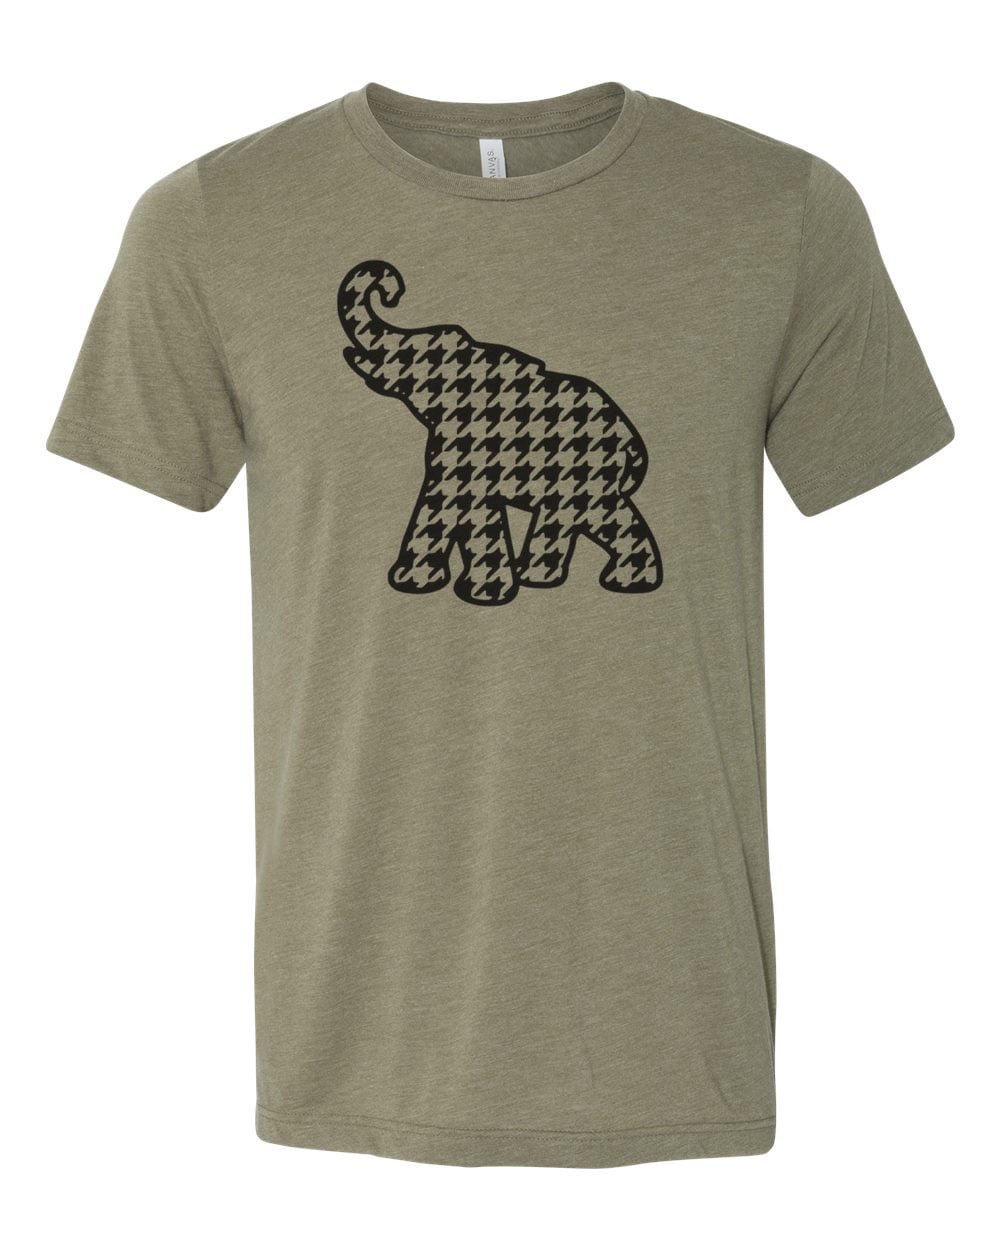 Boy's ALABAMA Short set;  Boy's Alabama gameday short set; Boy's shirt with elephants;